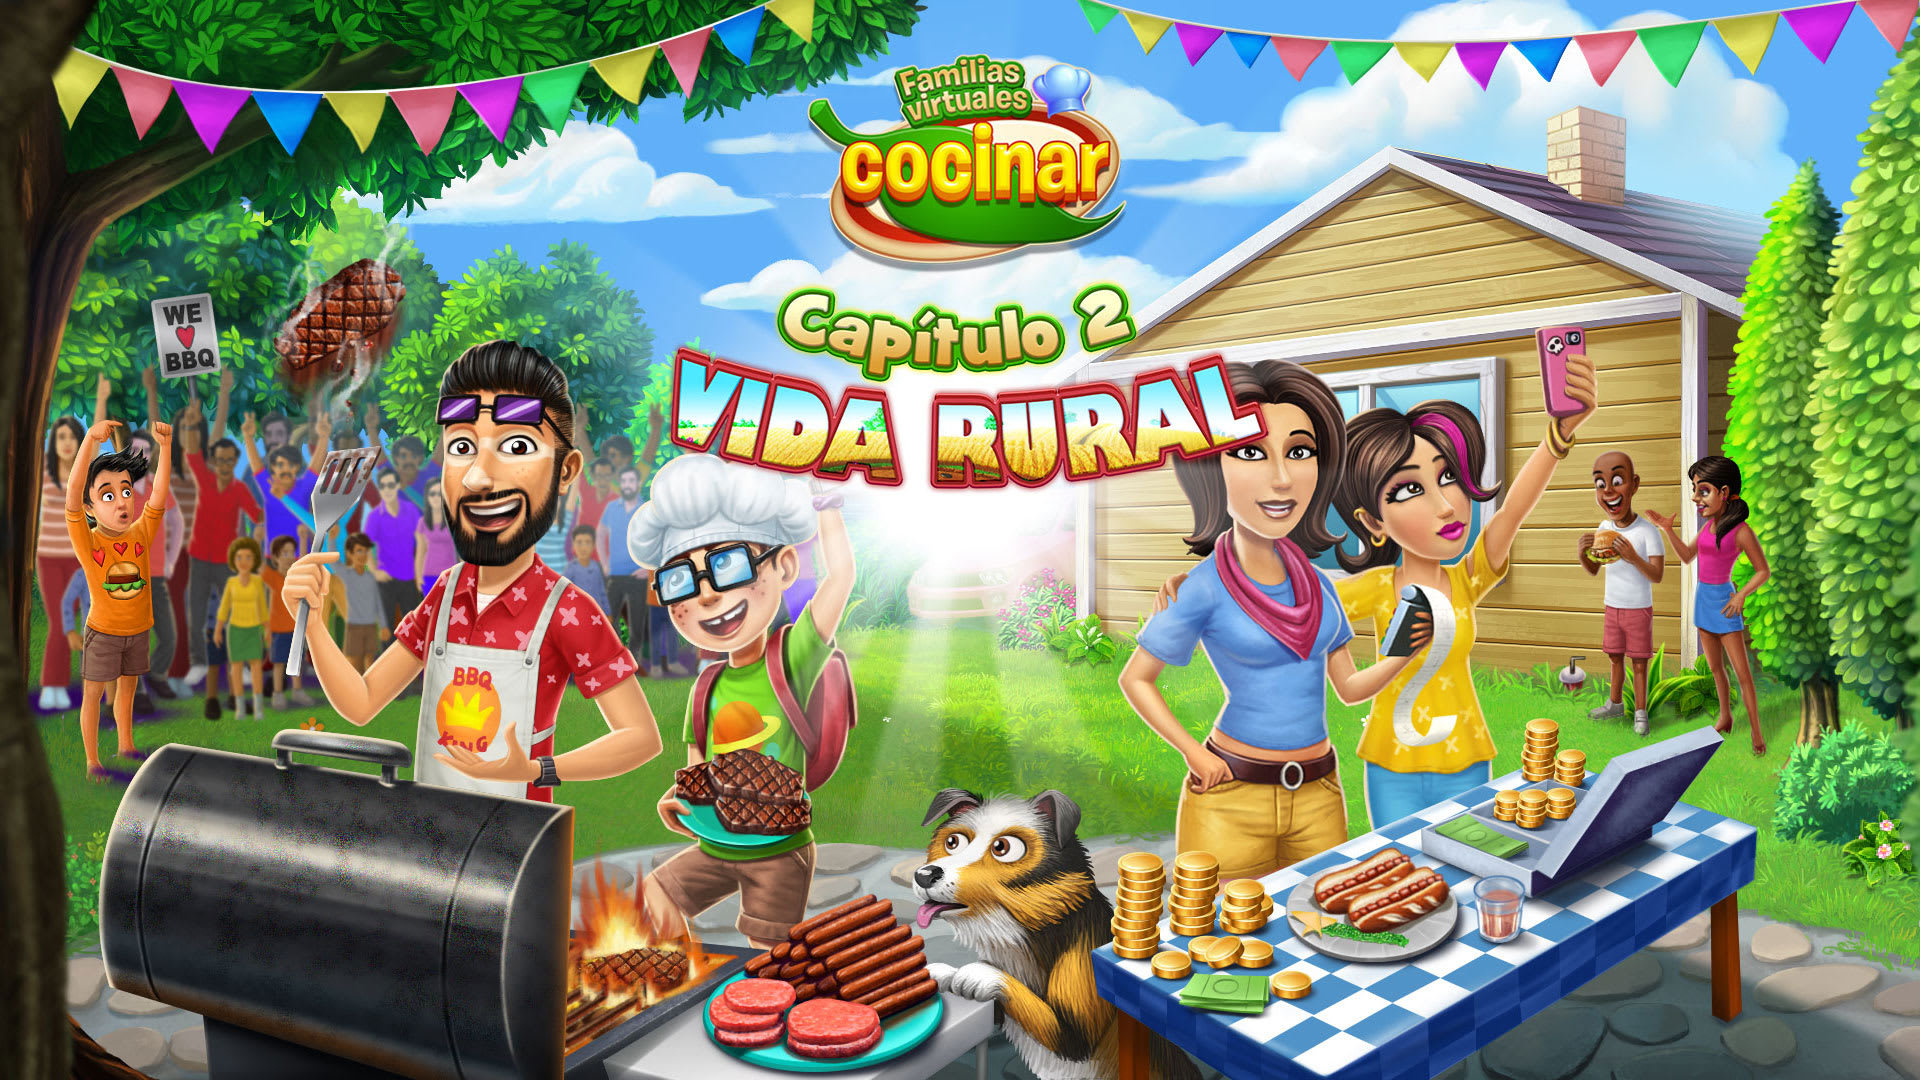 Virtual Families Cook Off: Capítulo 2 - Vida rural 1